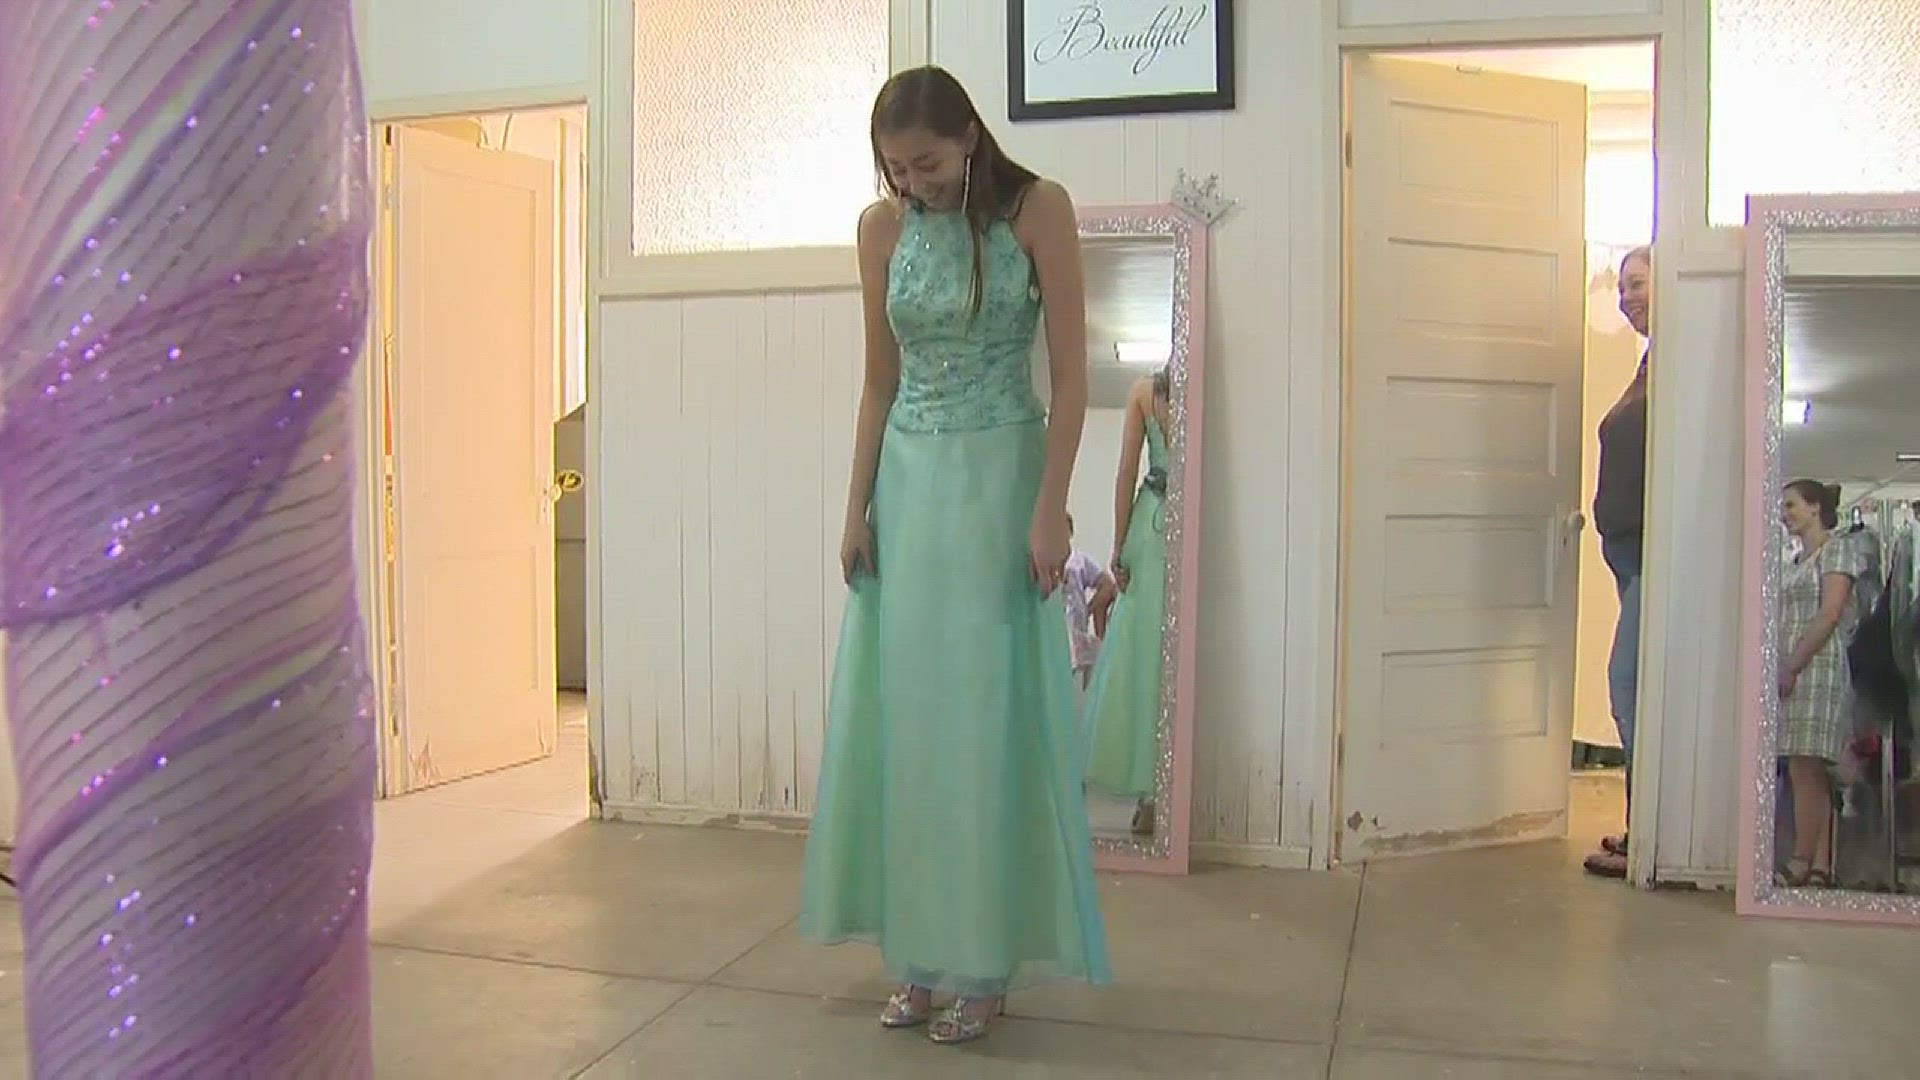 Taylor women help girls find prom dresses